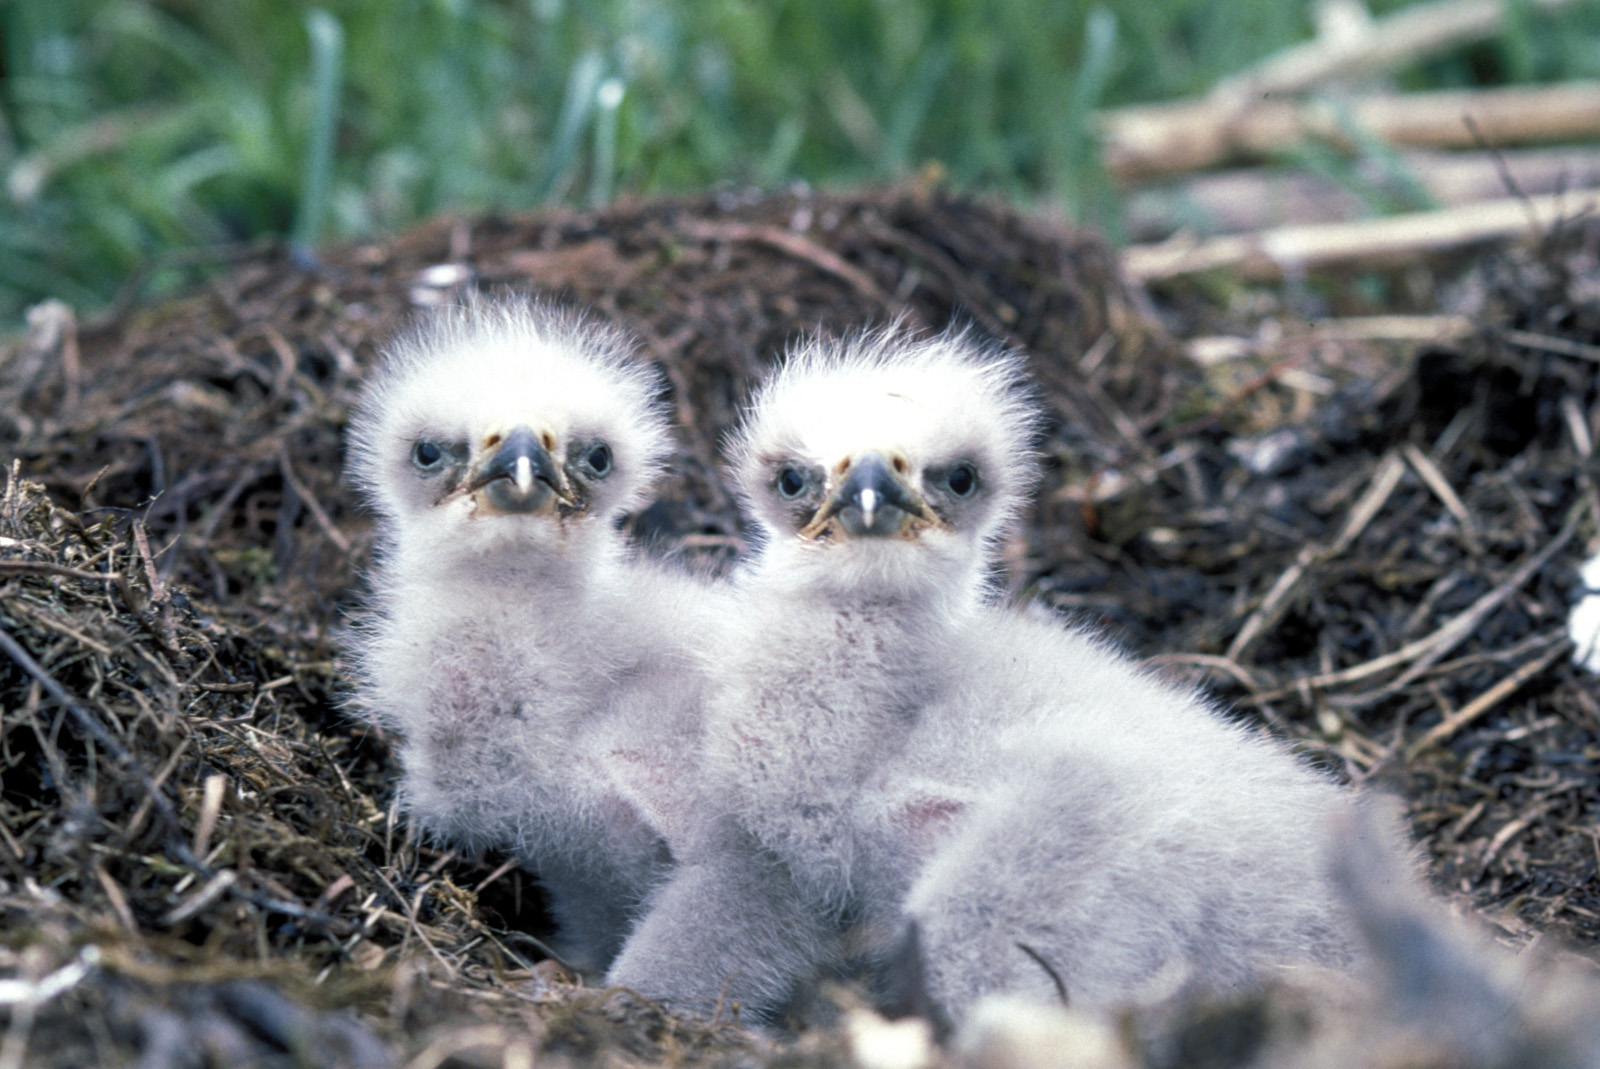 Bald eagle chicks - National Archives Identifier: 166693662